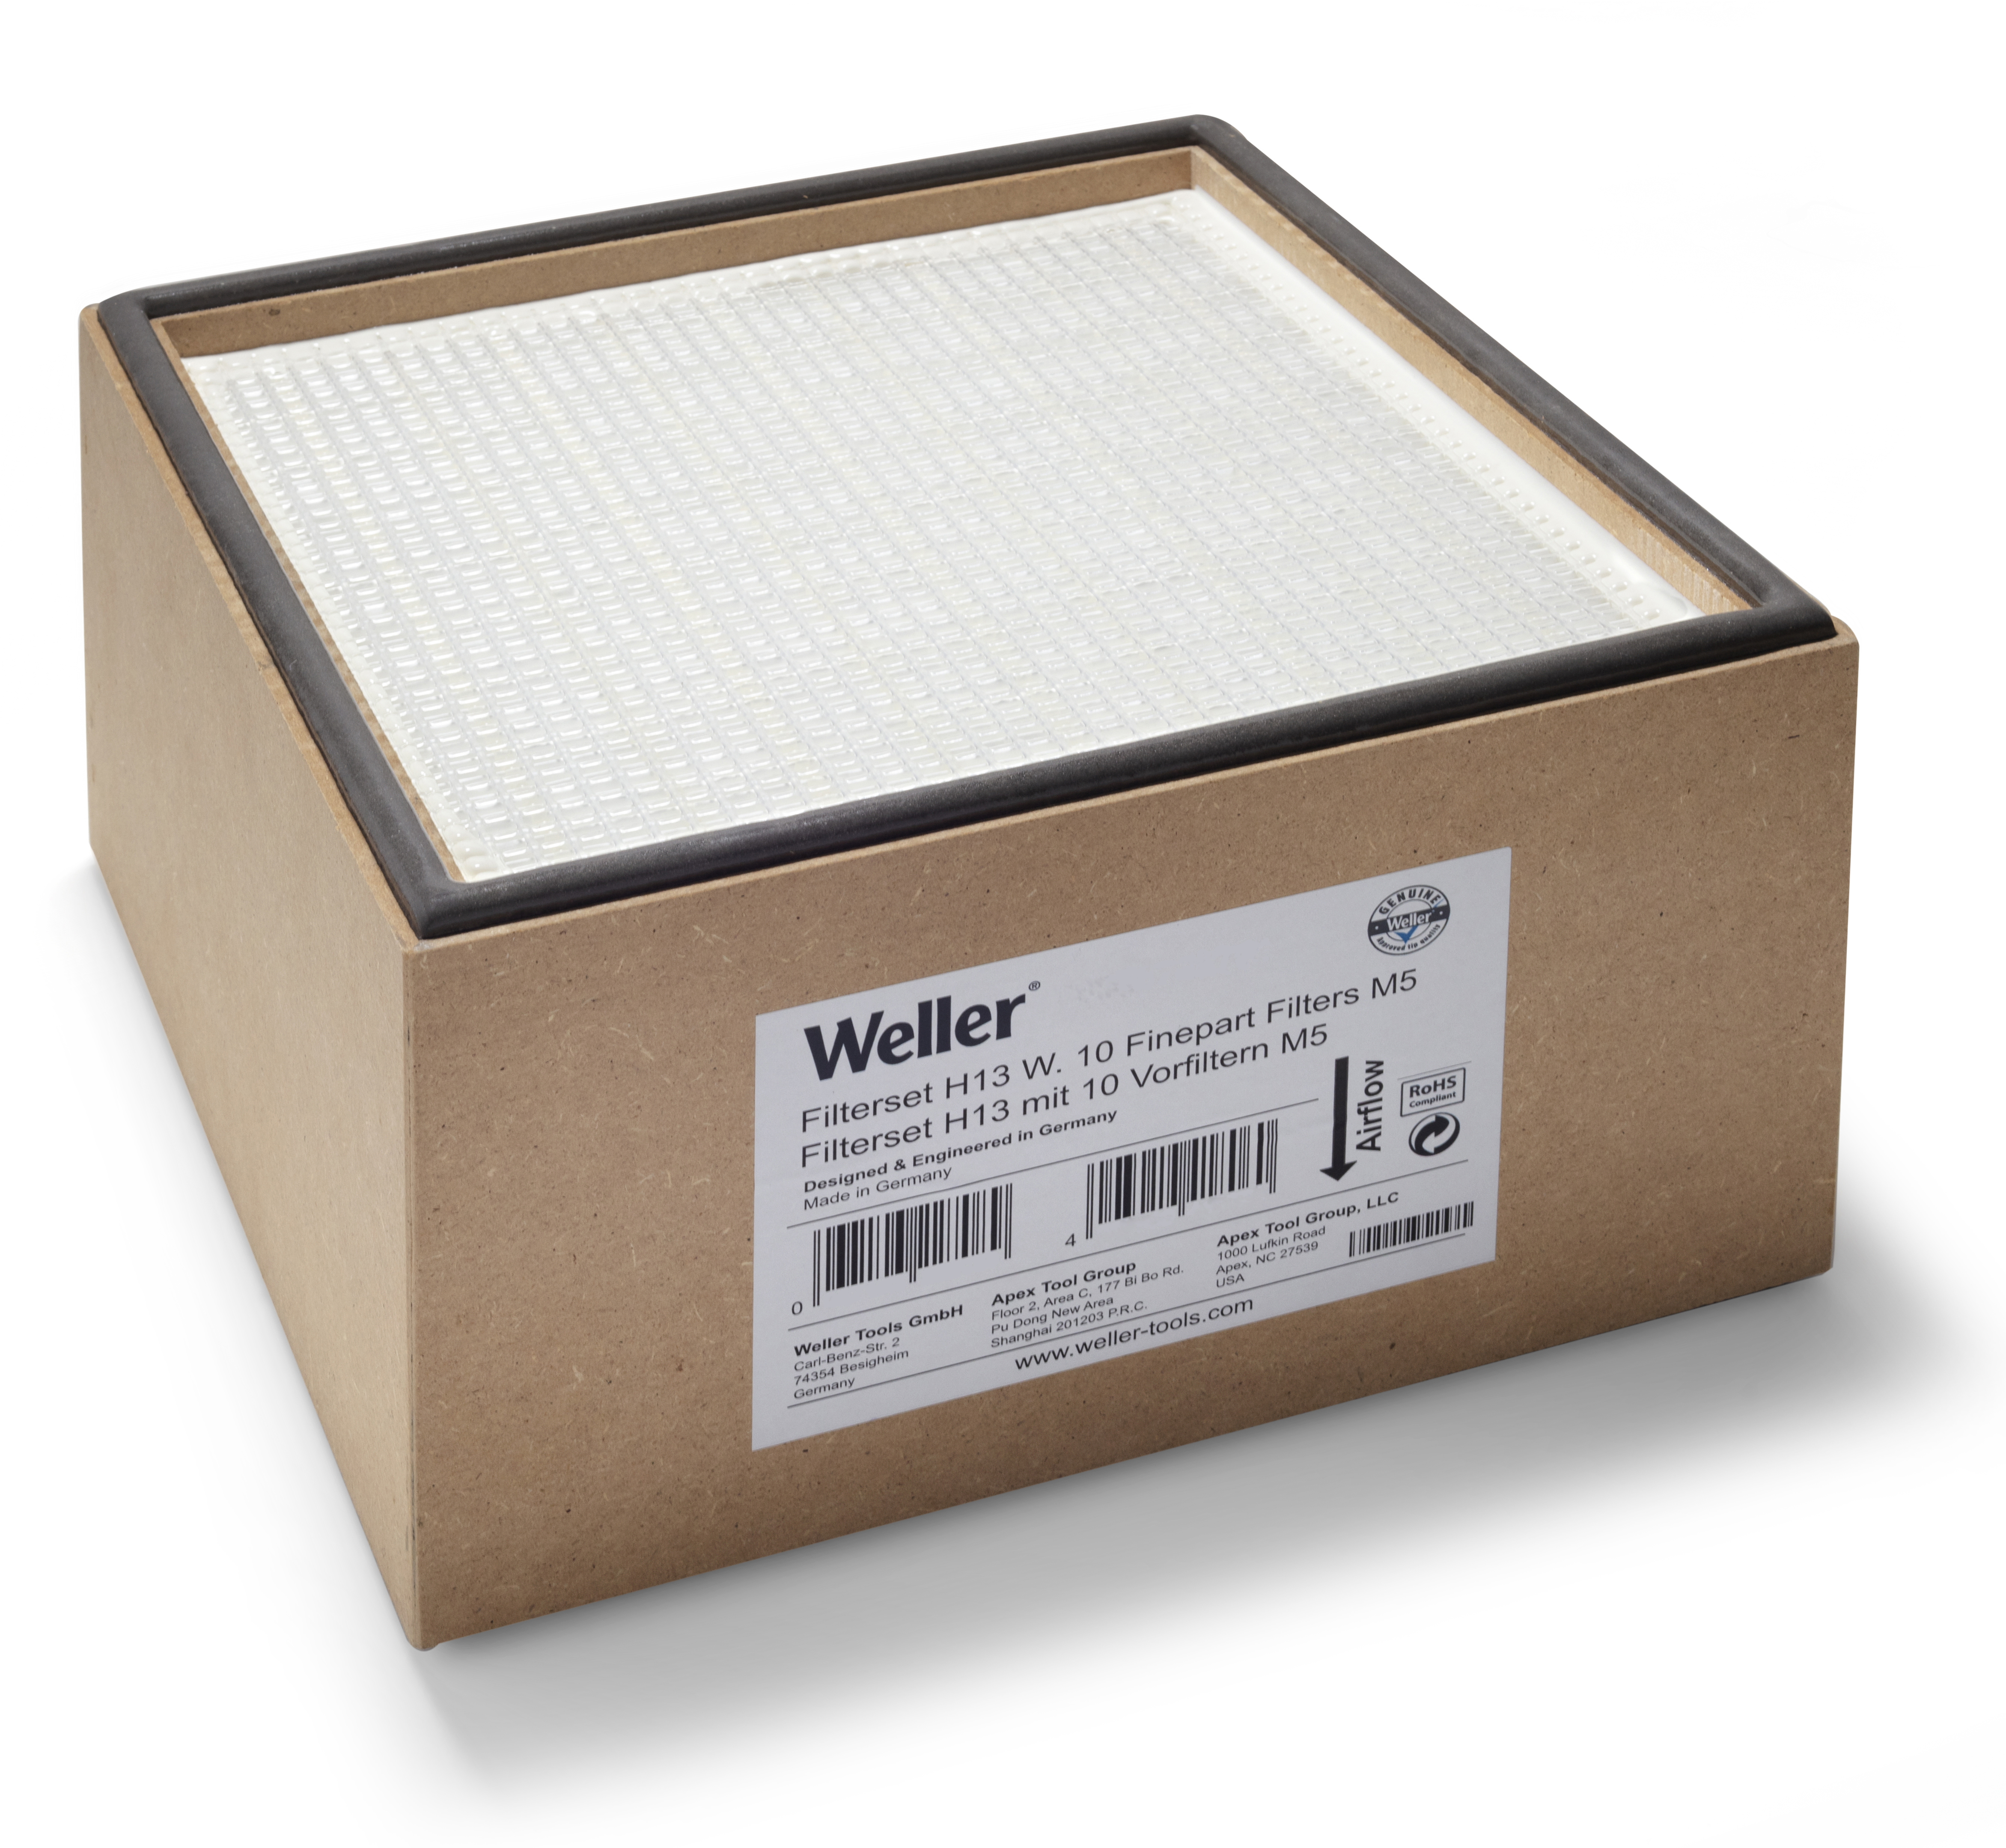 H filter. Weller Zero smog Wfe-2s. Фильтр Weller WR 2. Вакуумный фильтр Weller Vacuum Filters for wr3m / wr2, 3/pk. Weller economy Filter h13 AKF.